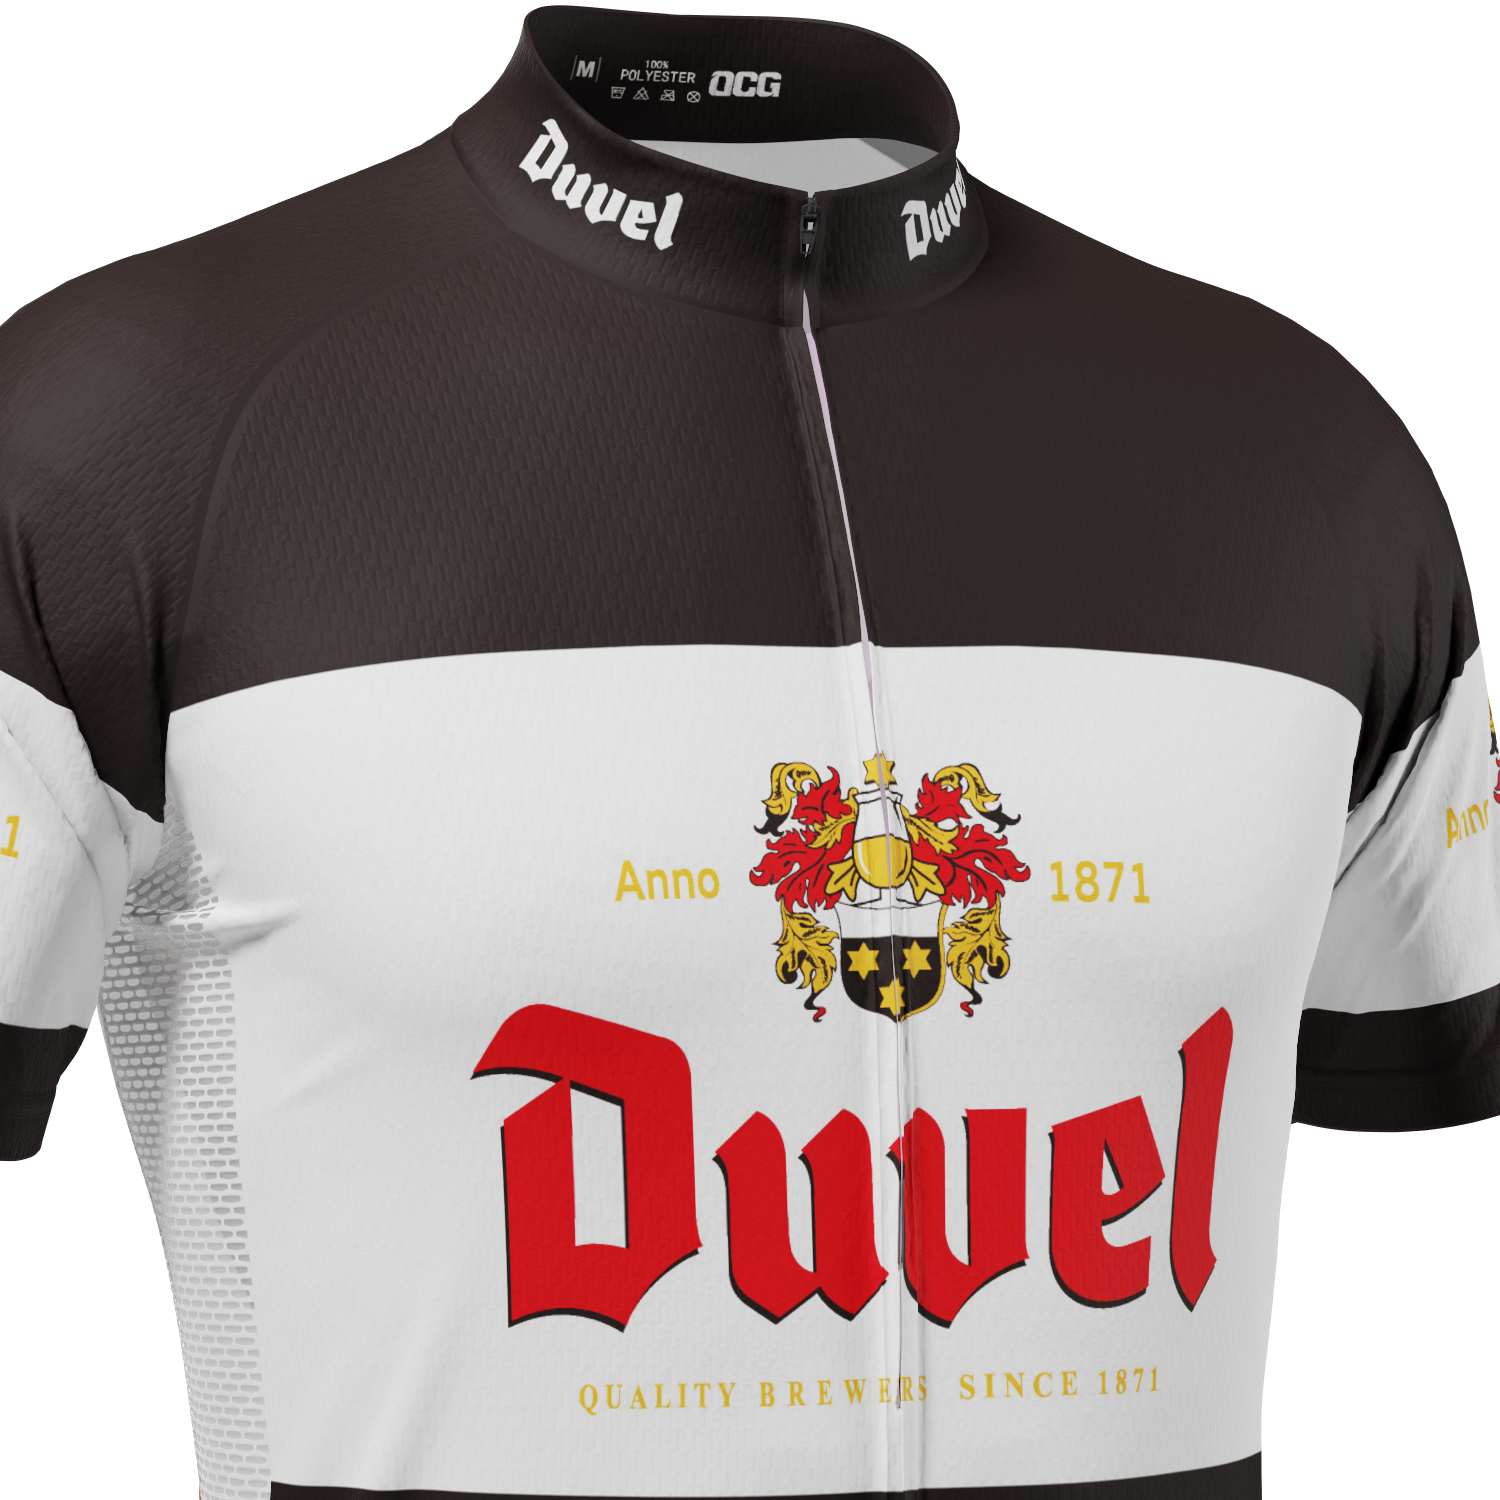 Men's Duvel Black Retro Short Sleeve Cycling Jersey